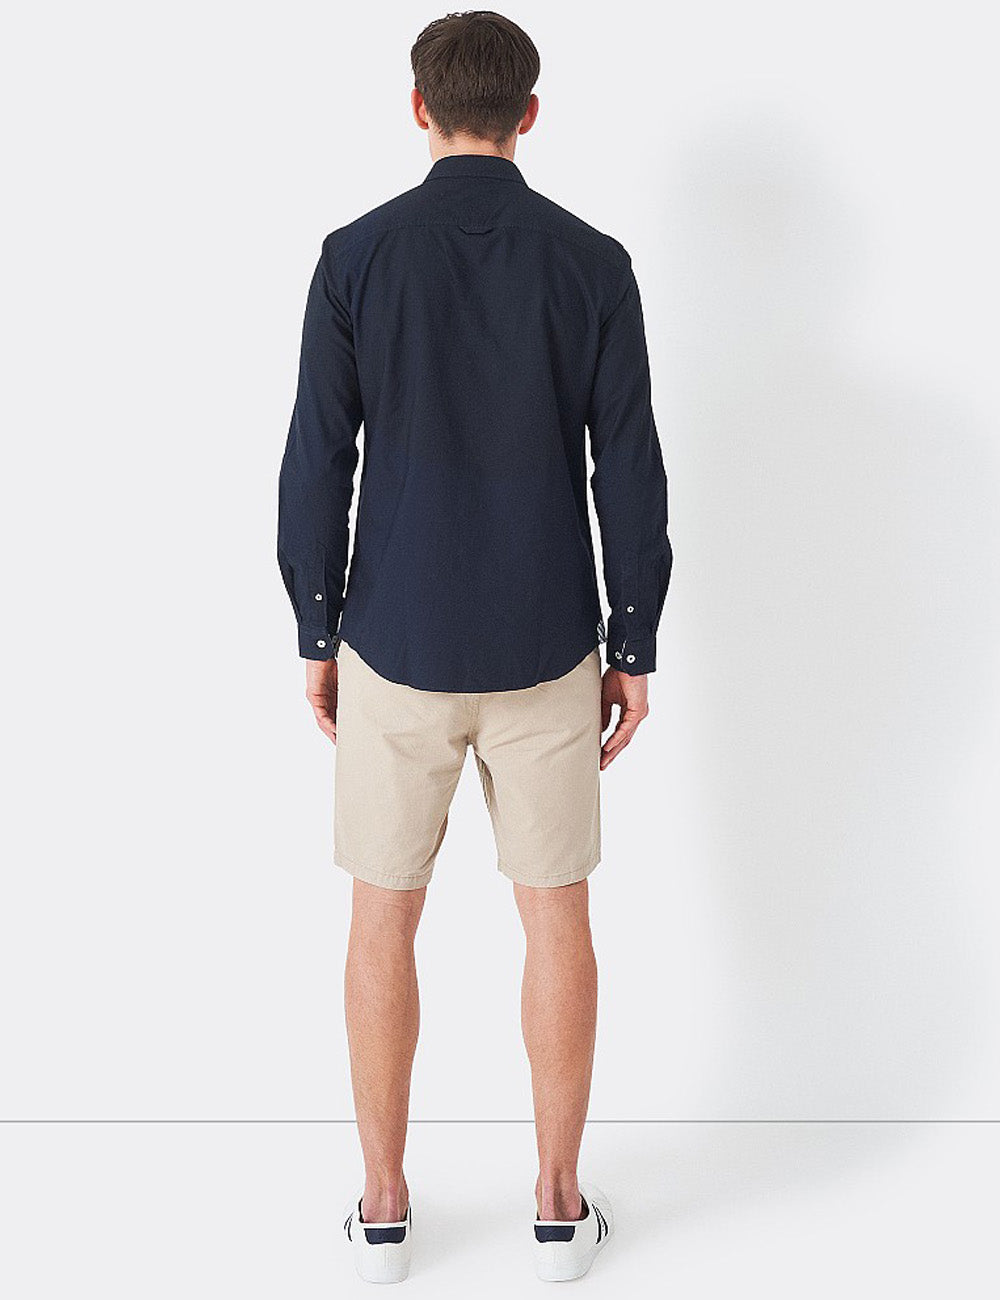 Crew Clothing Oxford Slim Fit Shirt - Navy